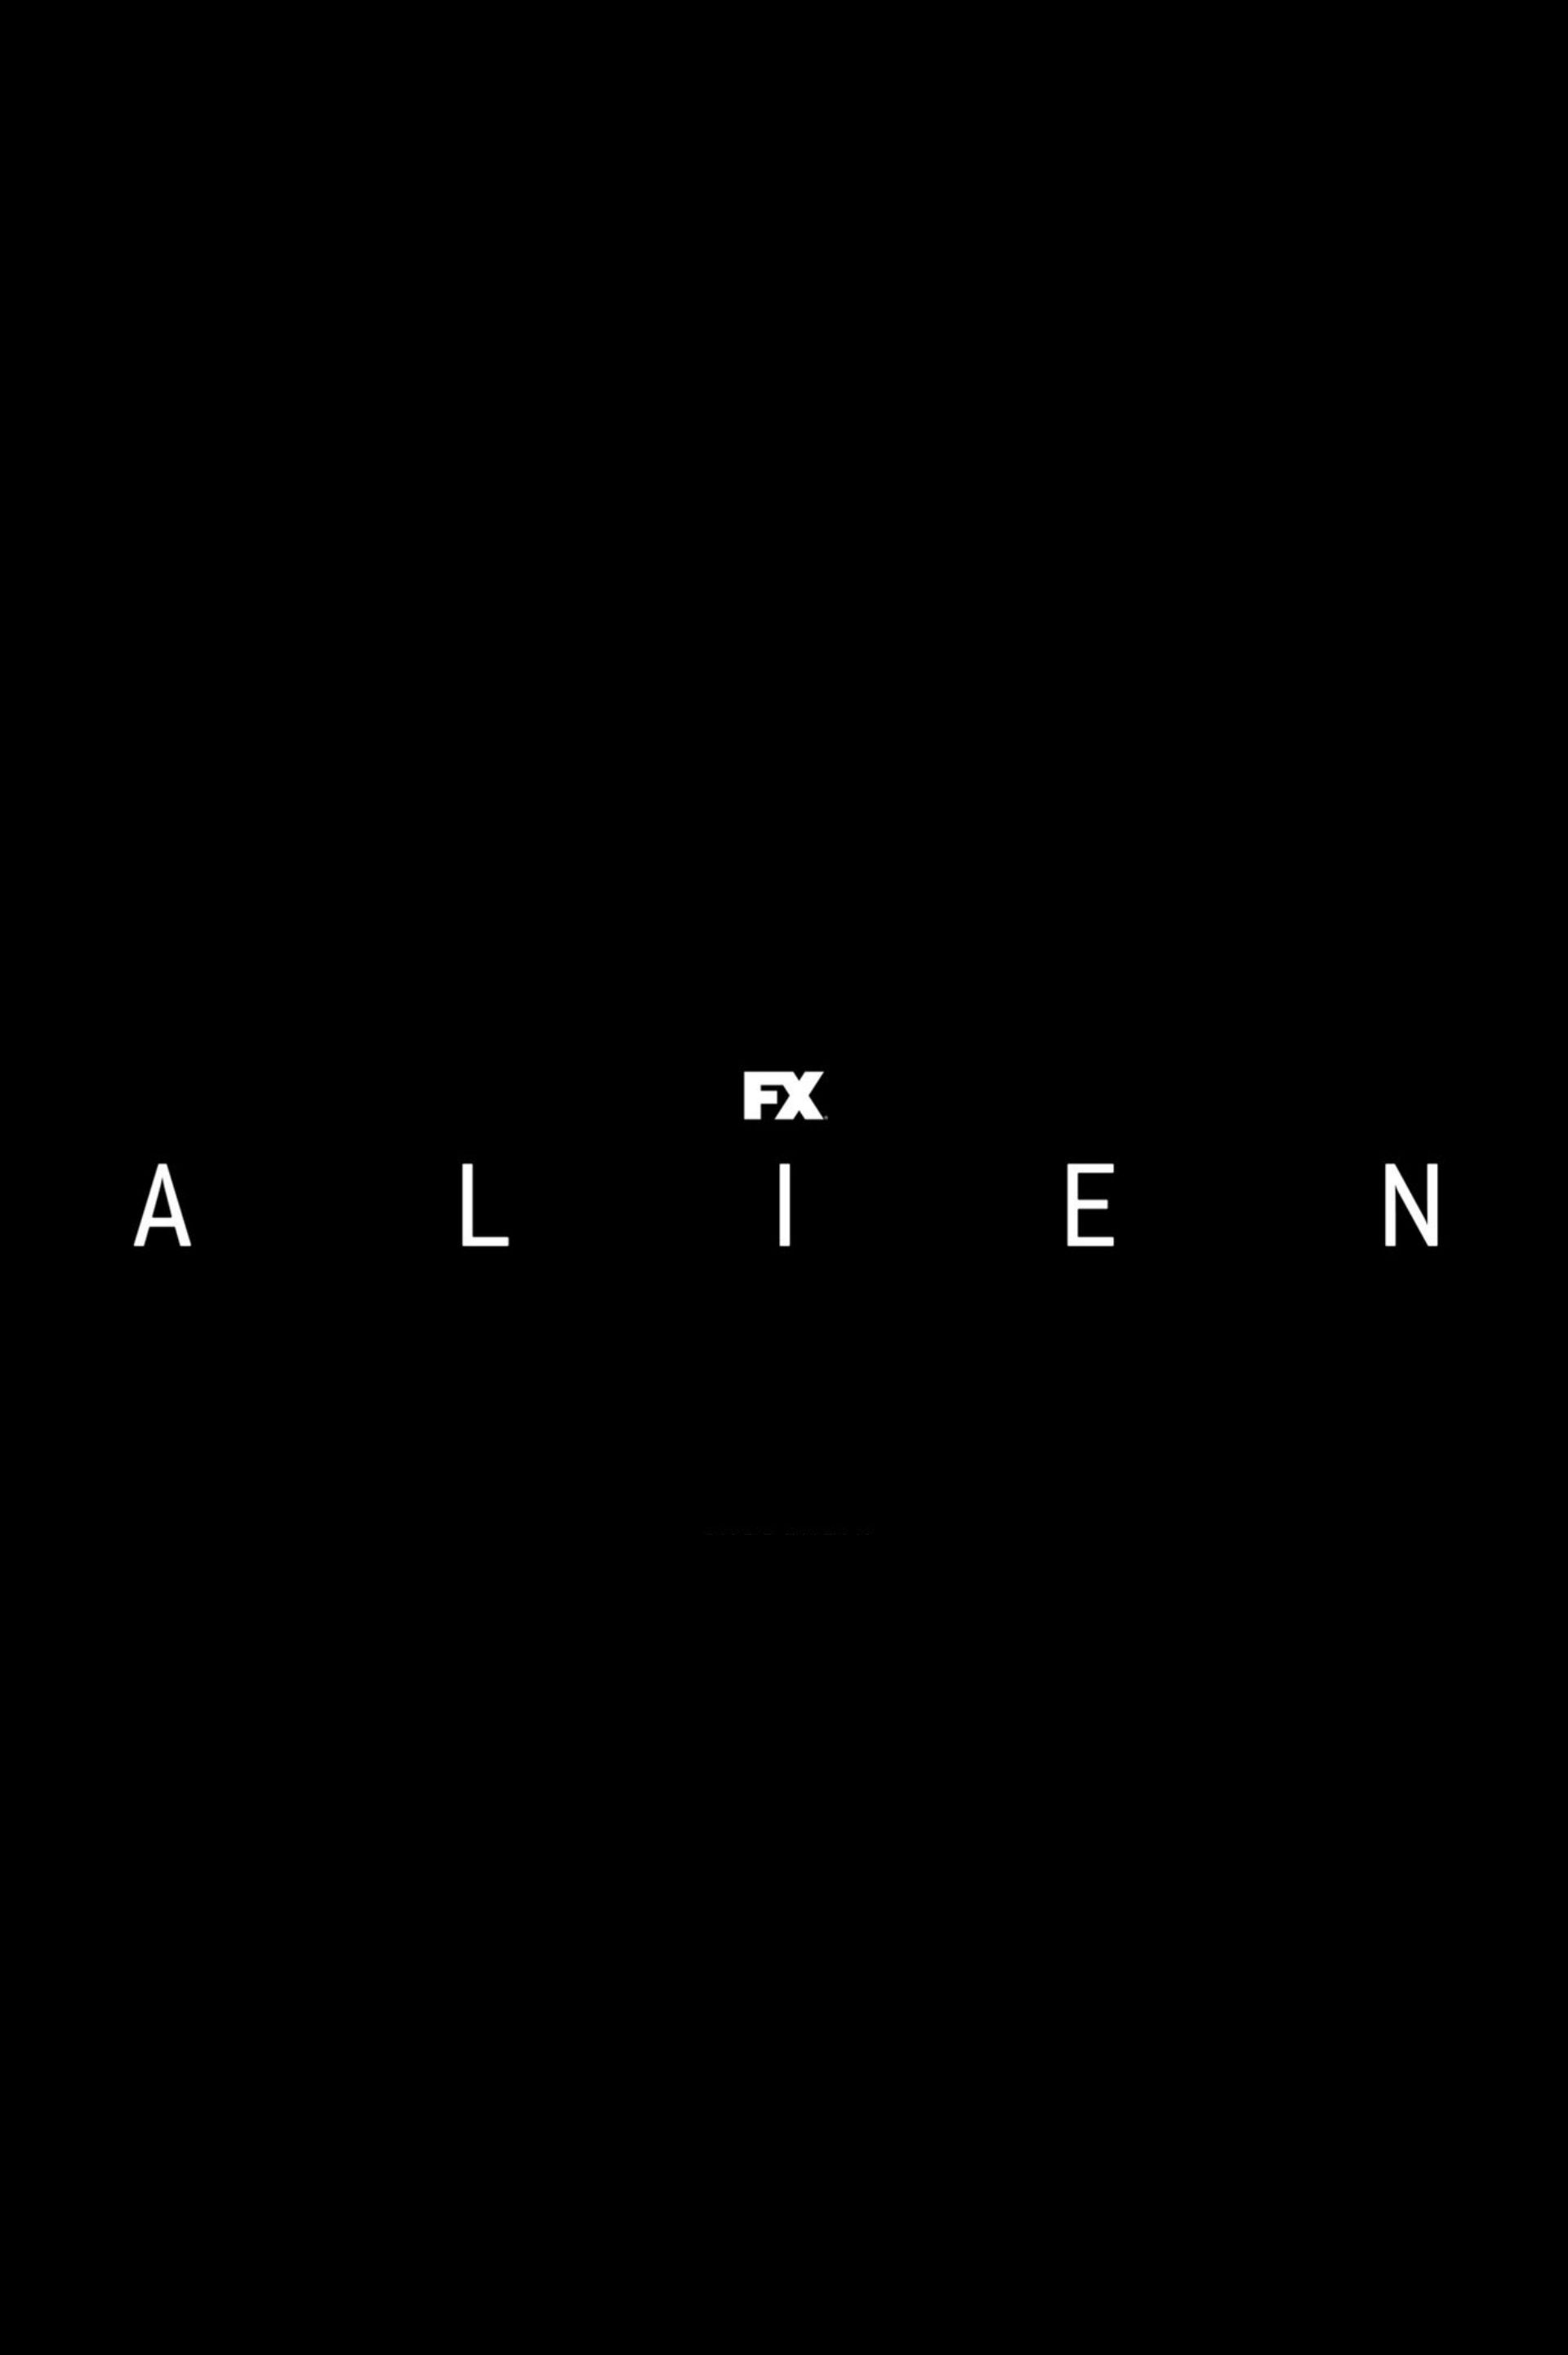 Poster for the Alien FX series